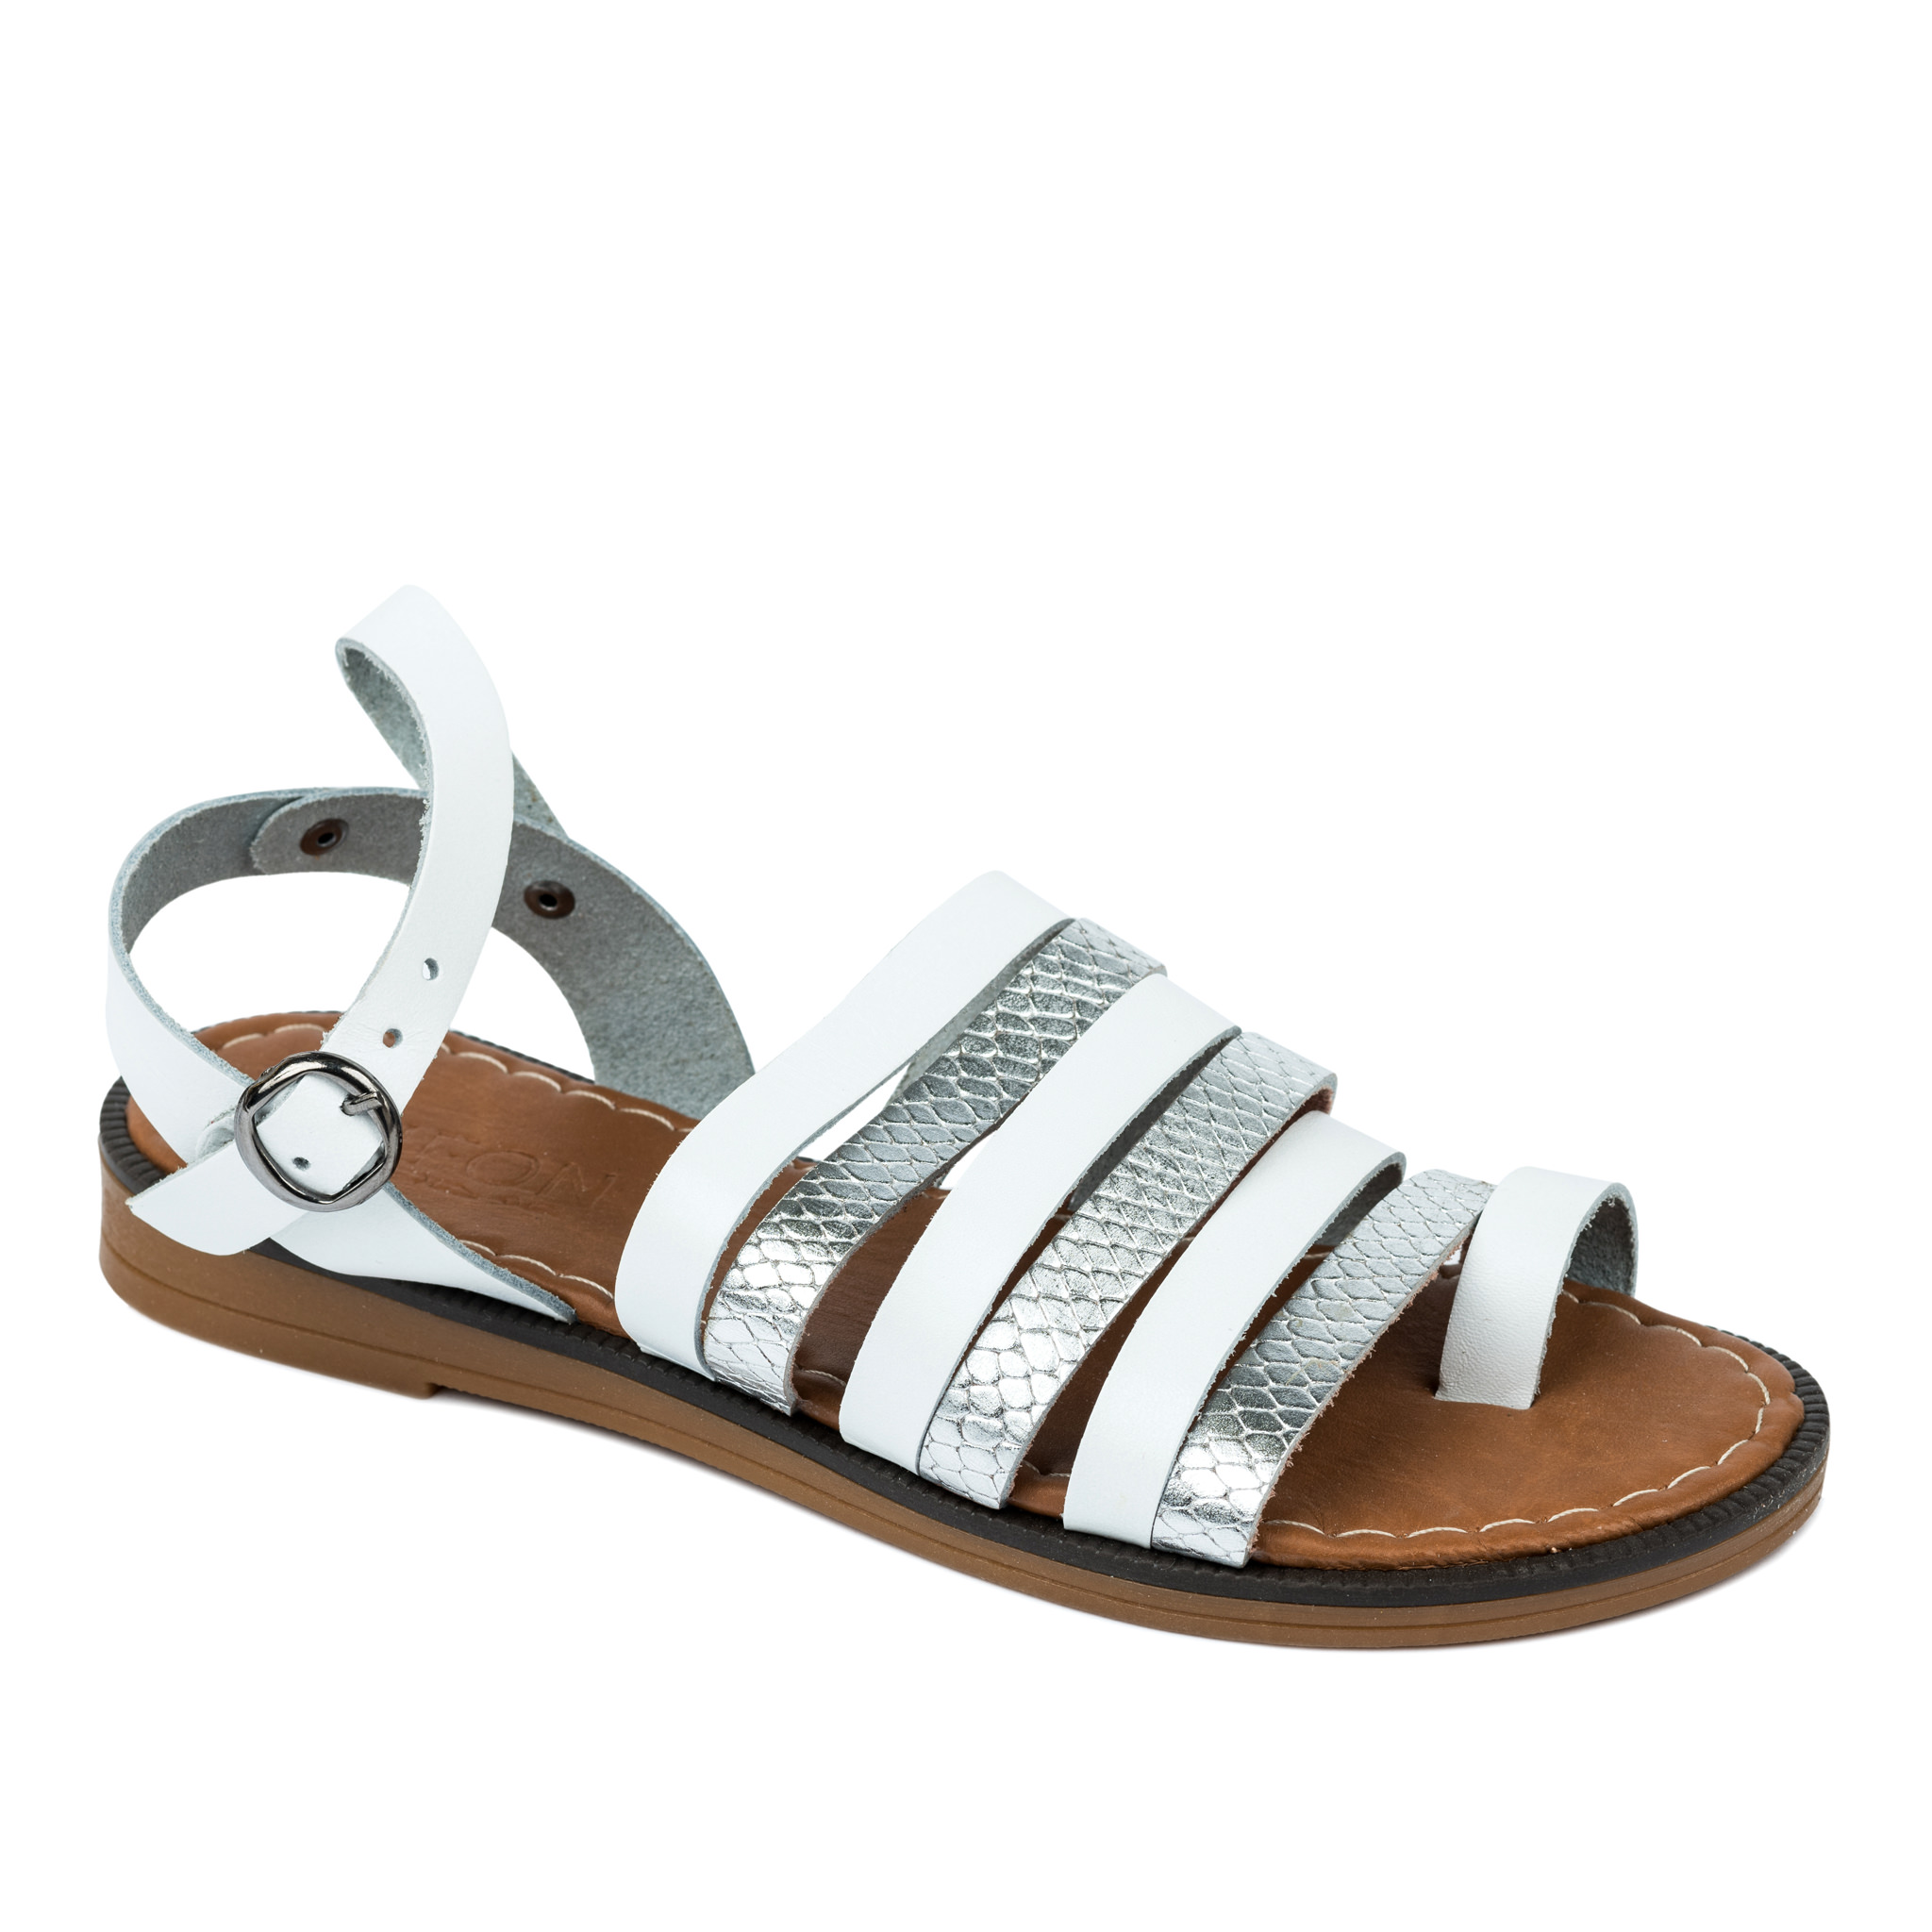 Women sandals A339 - WHITE